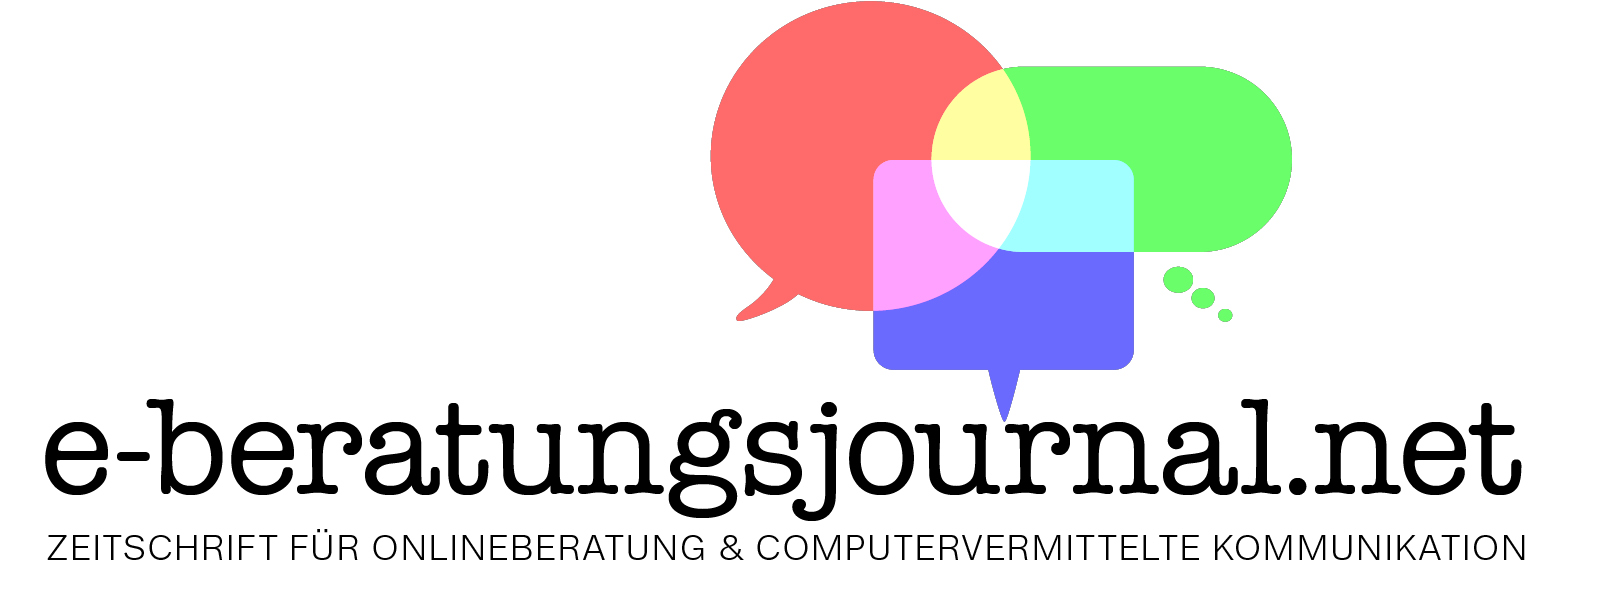 e-beratungsjournal-header-end-LOGO